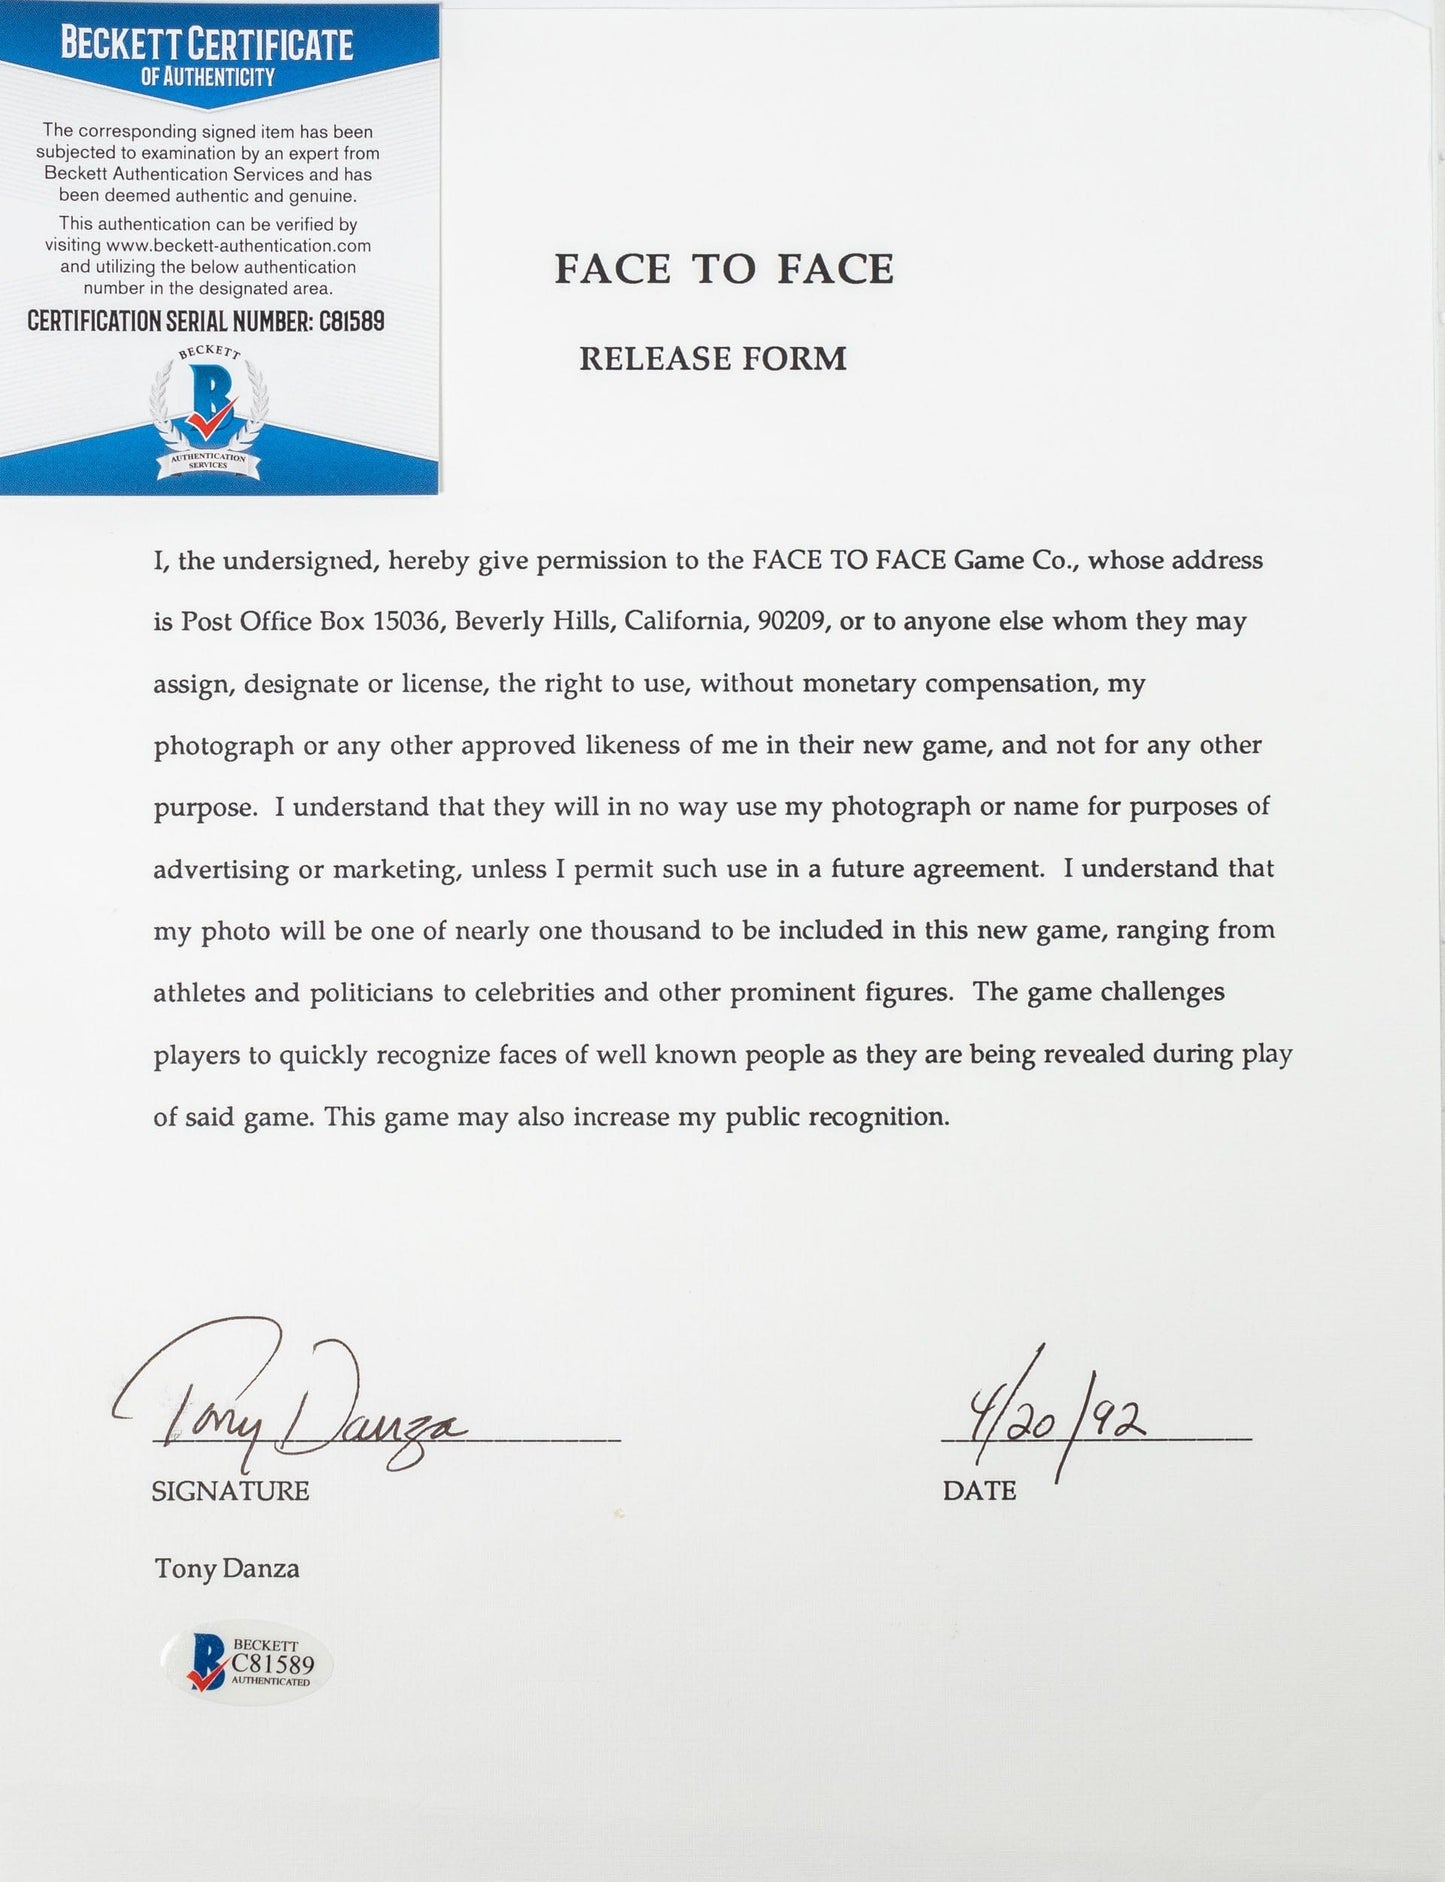 Face to Face Board Game Celebrity Autograph- Tony Danza